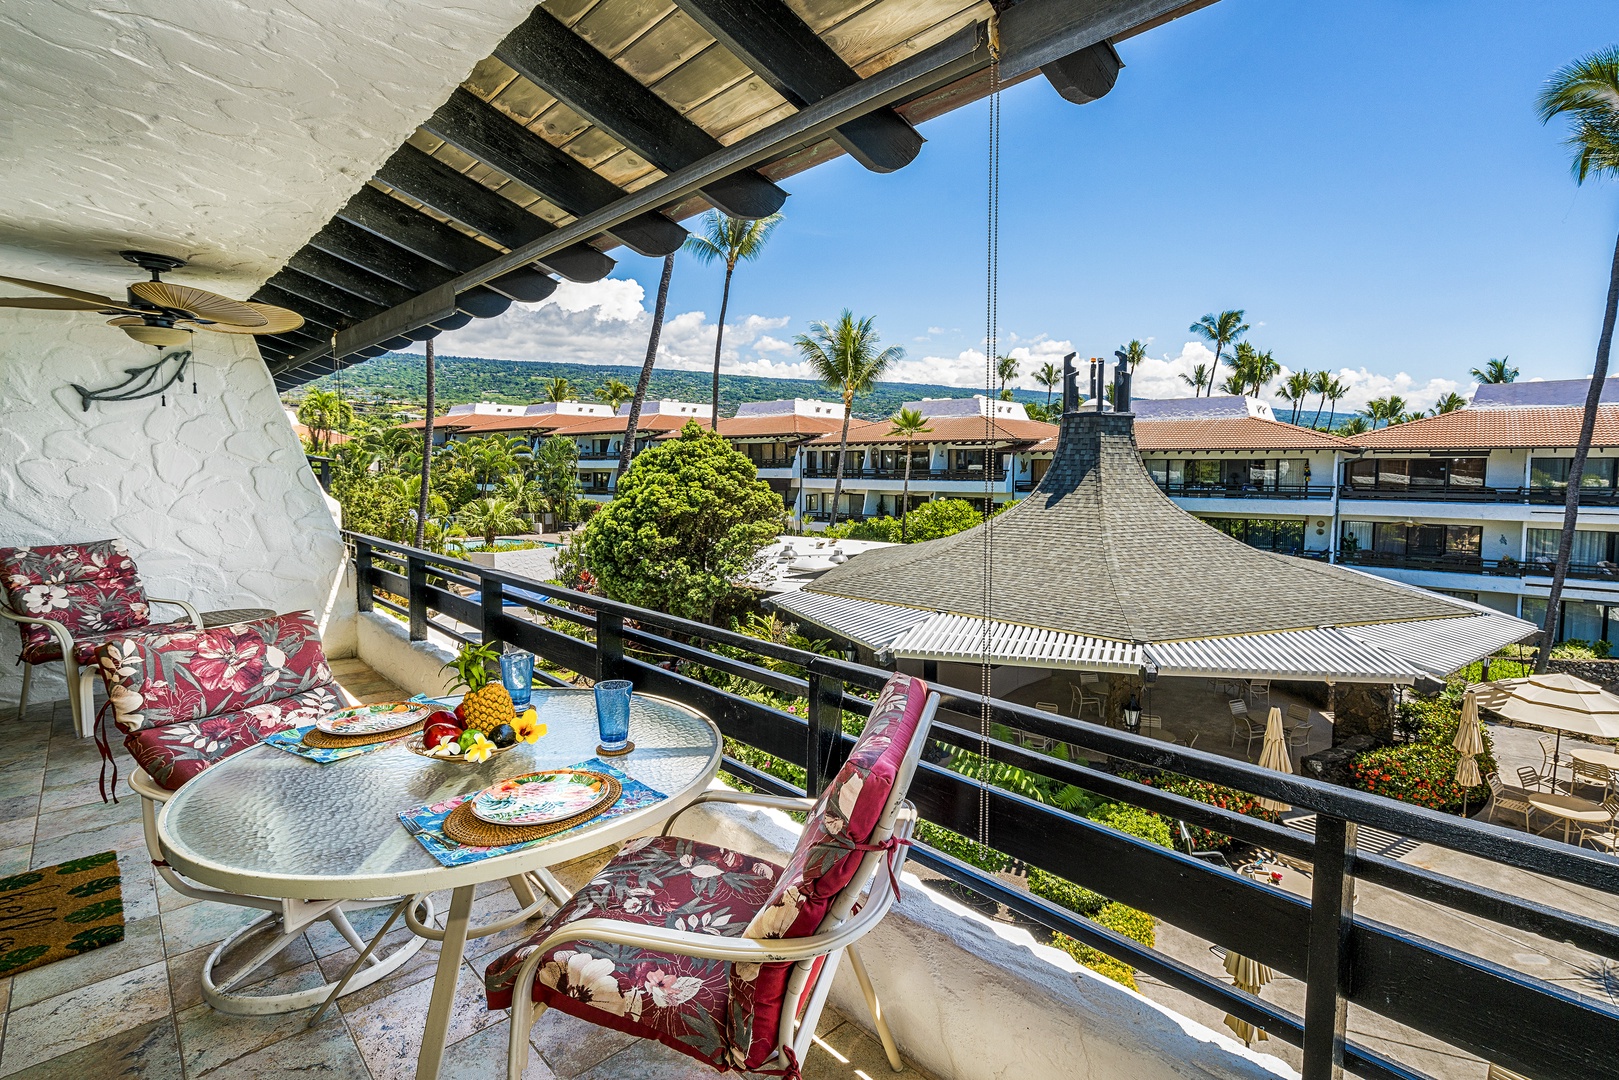 Kailua Kona Vacation Rentals, Casa De Emdeko 336 - Dining for four on this spacious Lanai!